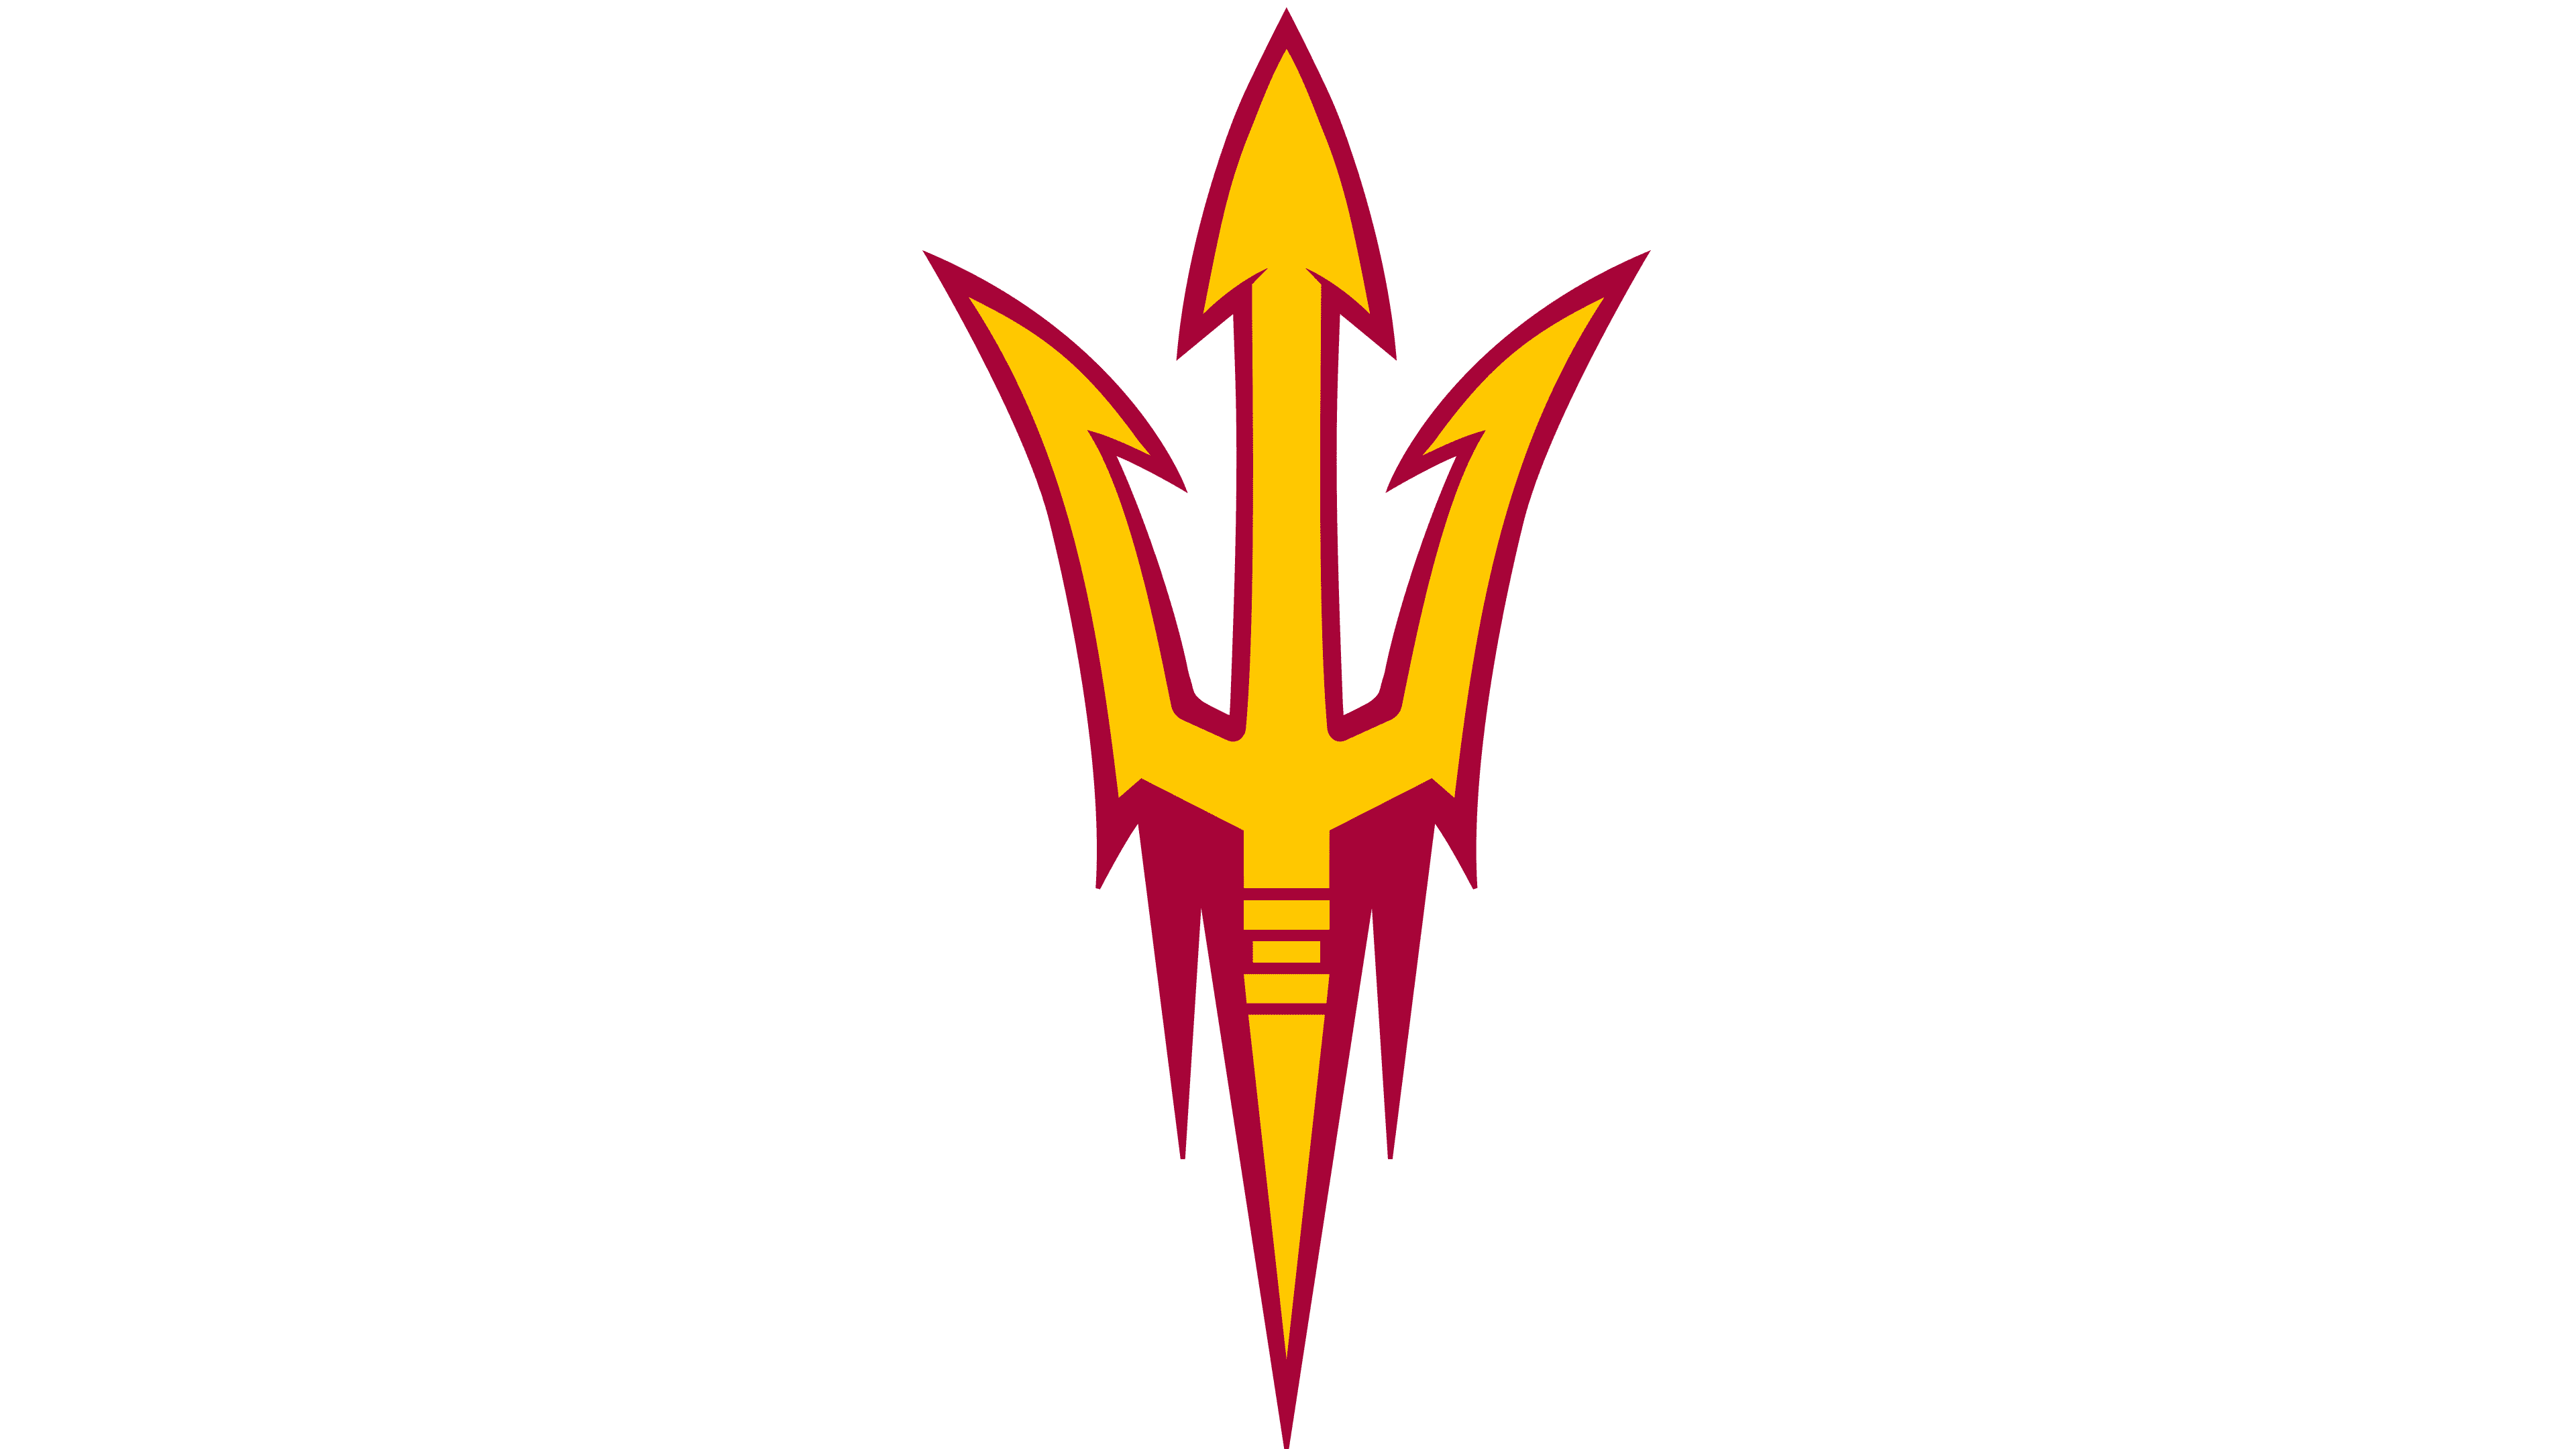 Arizona State Sun Devils 20'' x 20'' Retro Logo Circle Sign